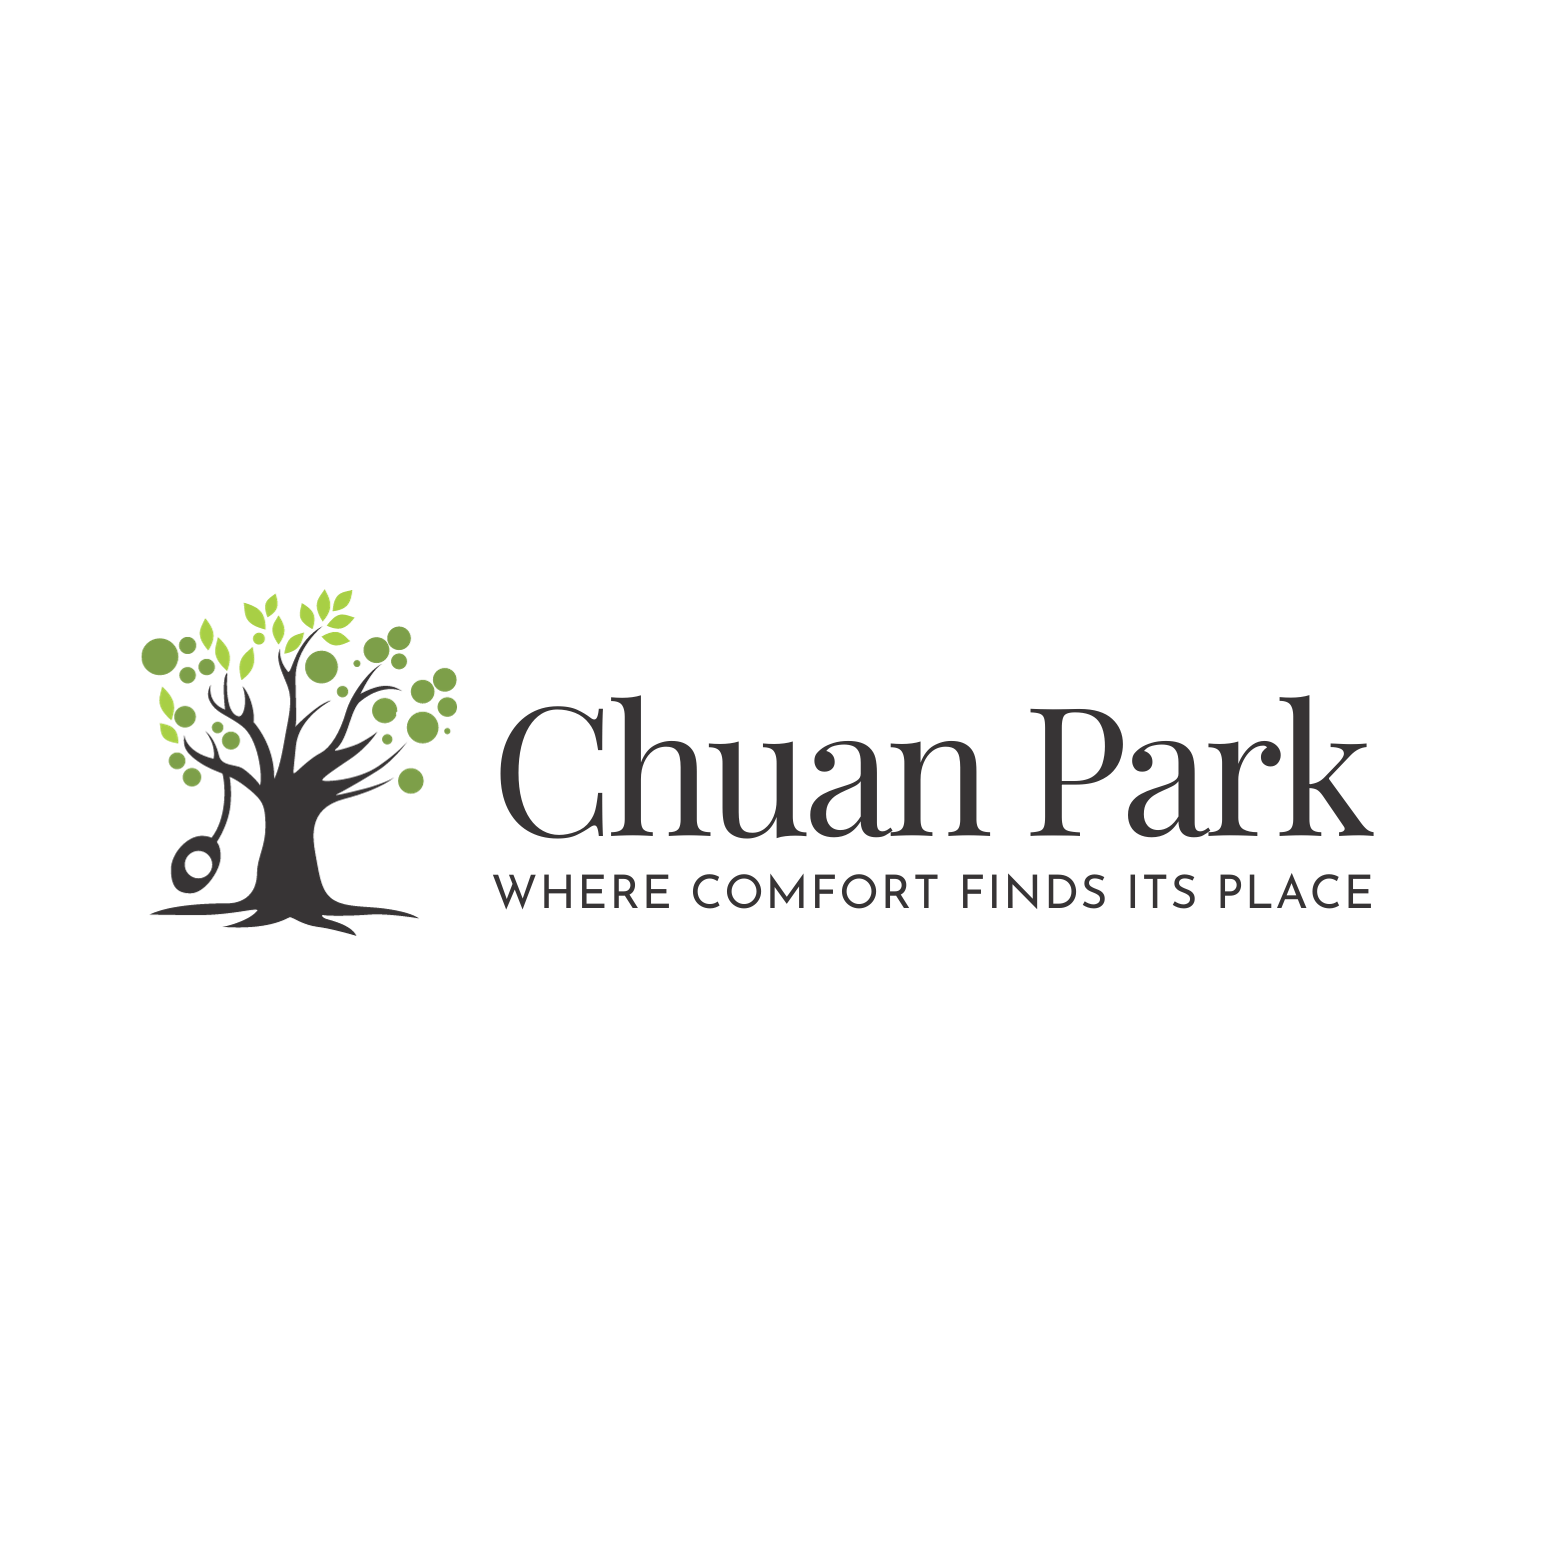 Chuan Park location